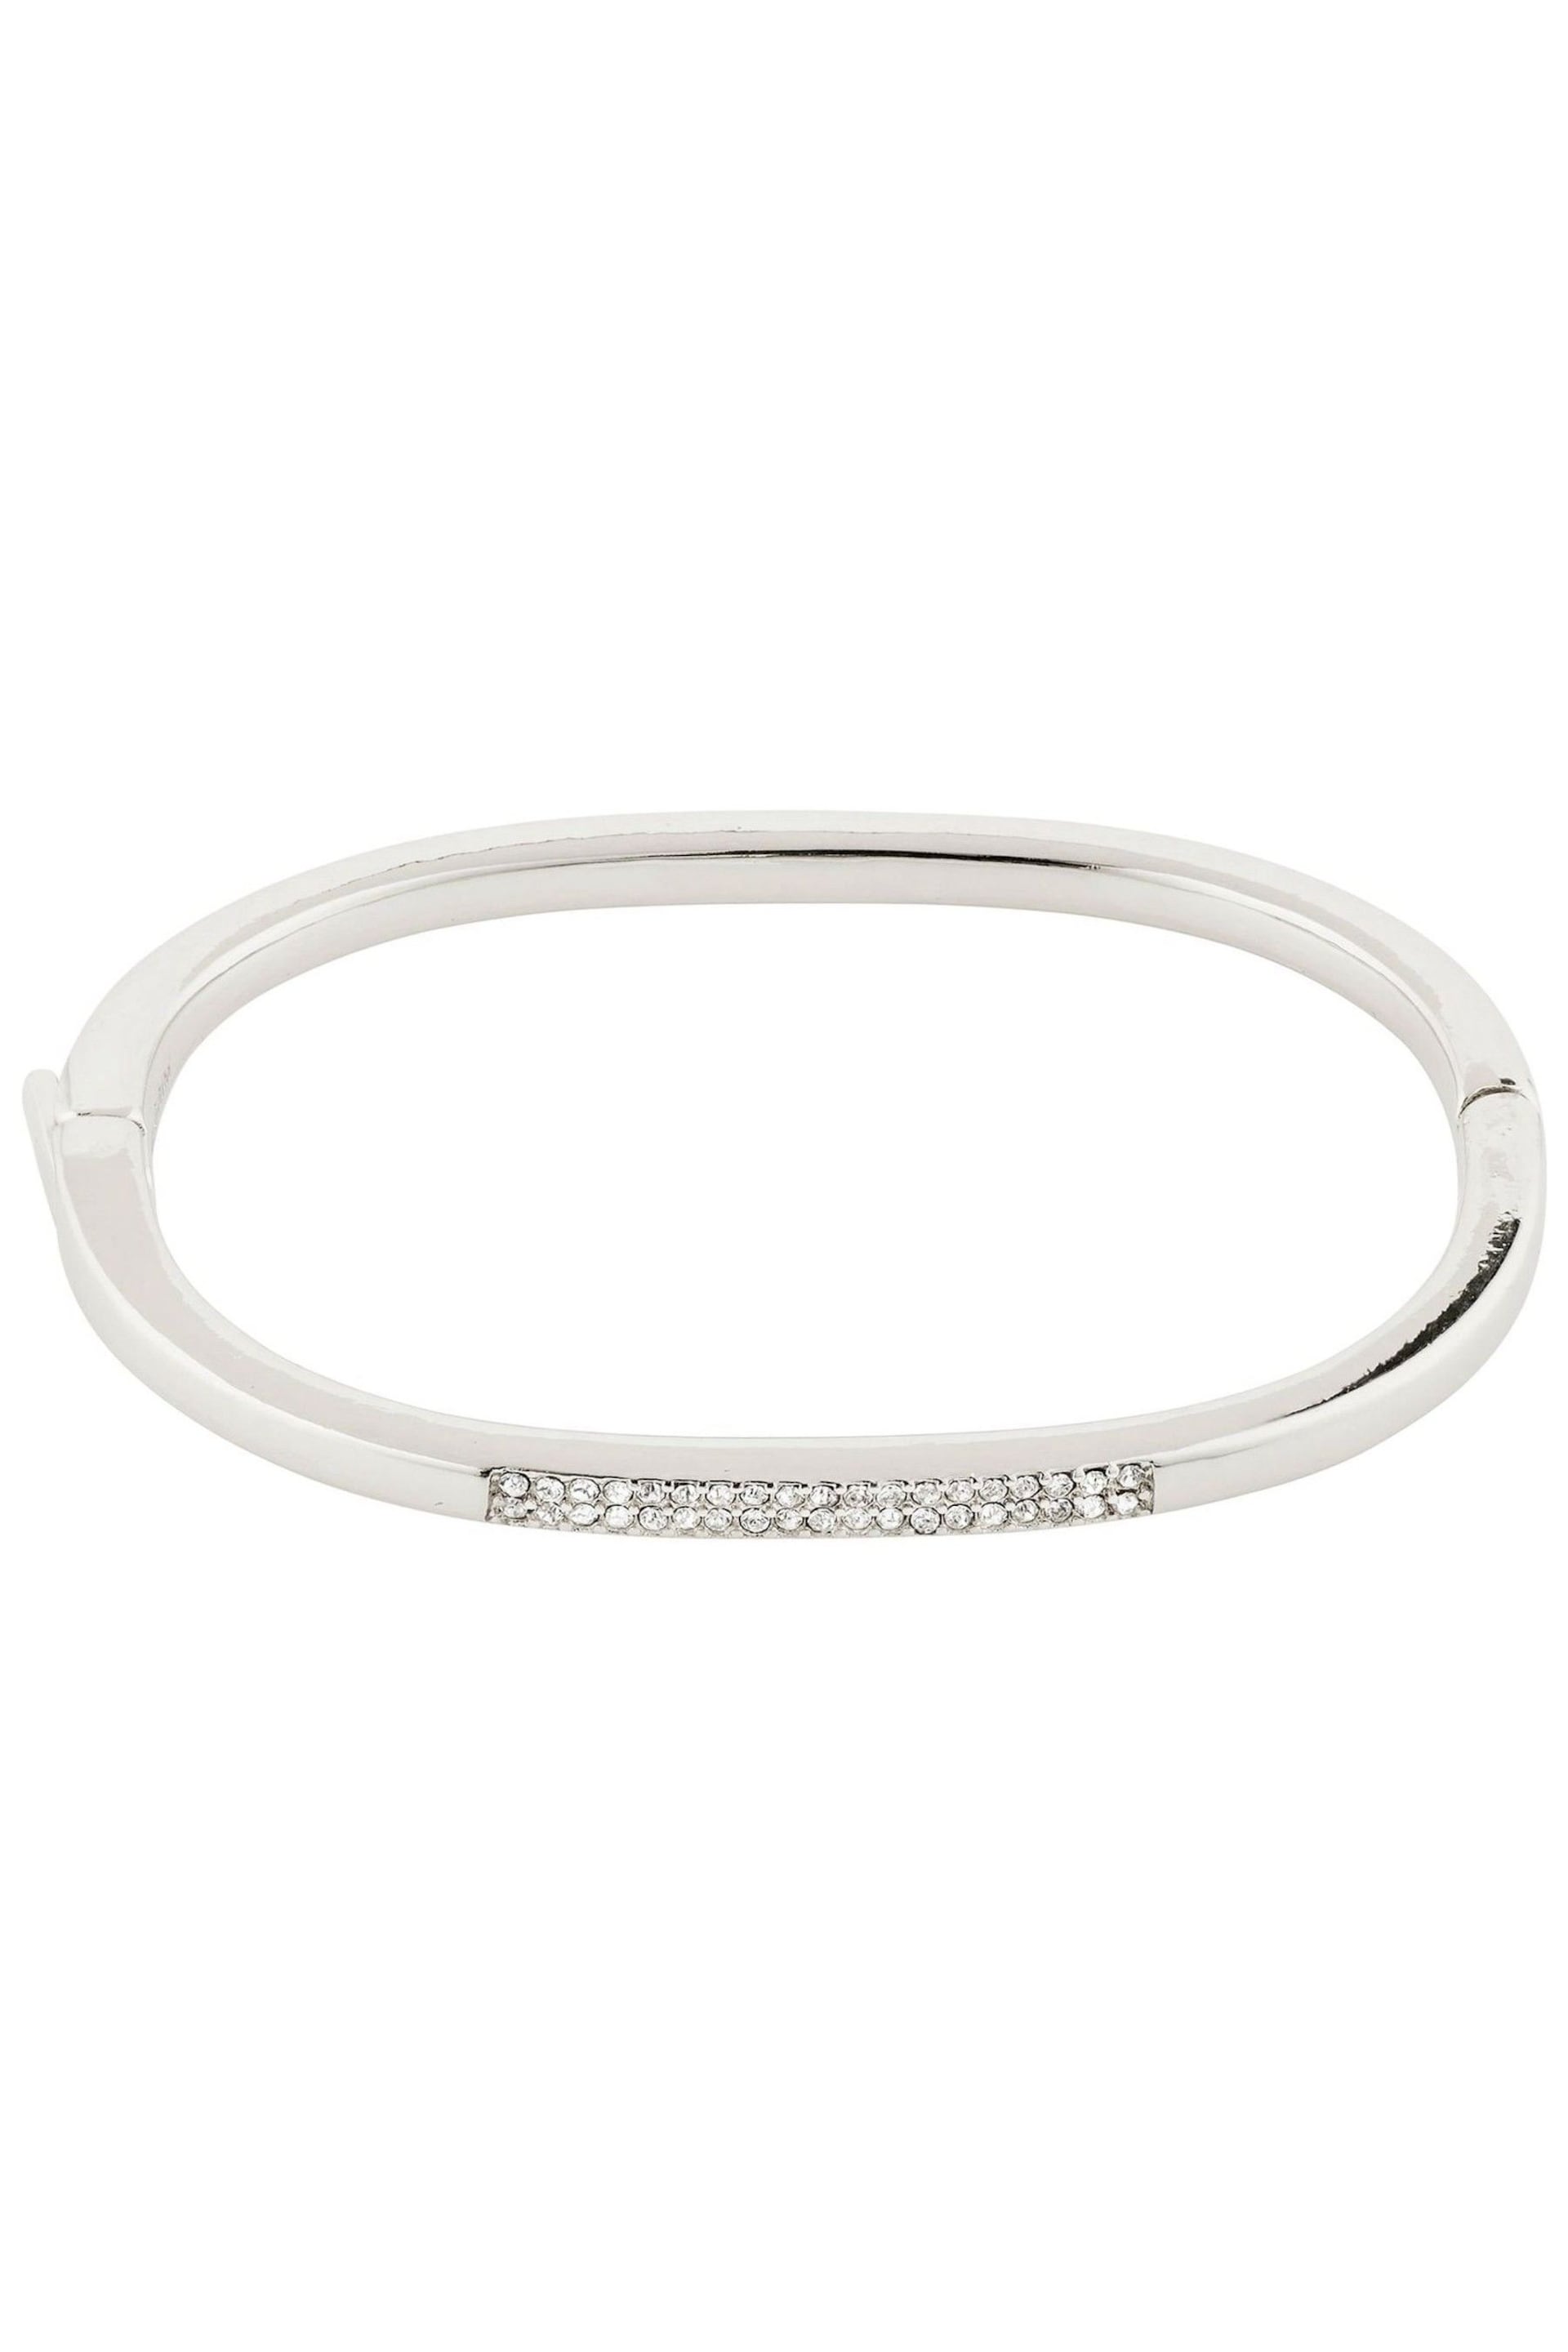 PILGRIM Silver STAR Recycled Crystal Bracelets - Image 1 of 2